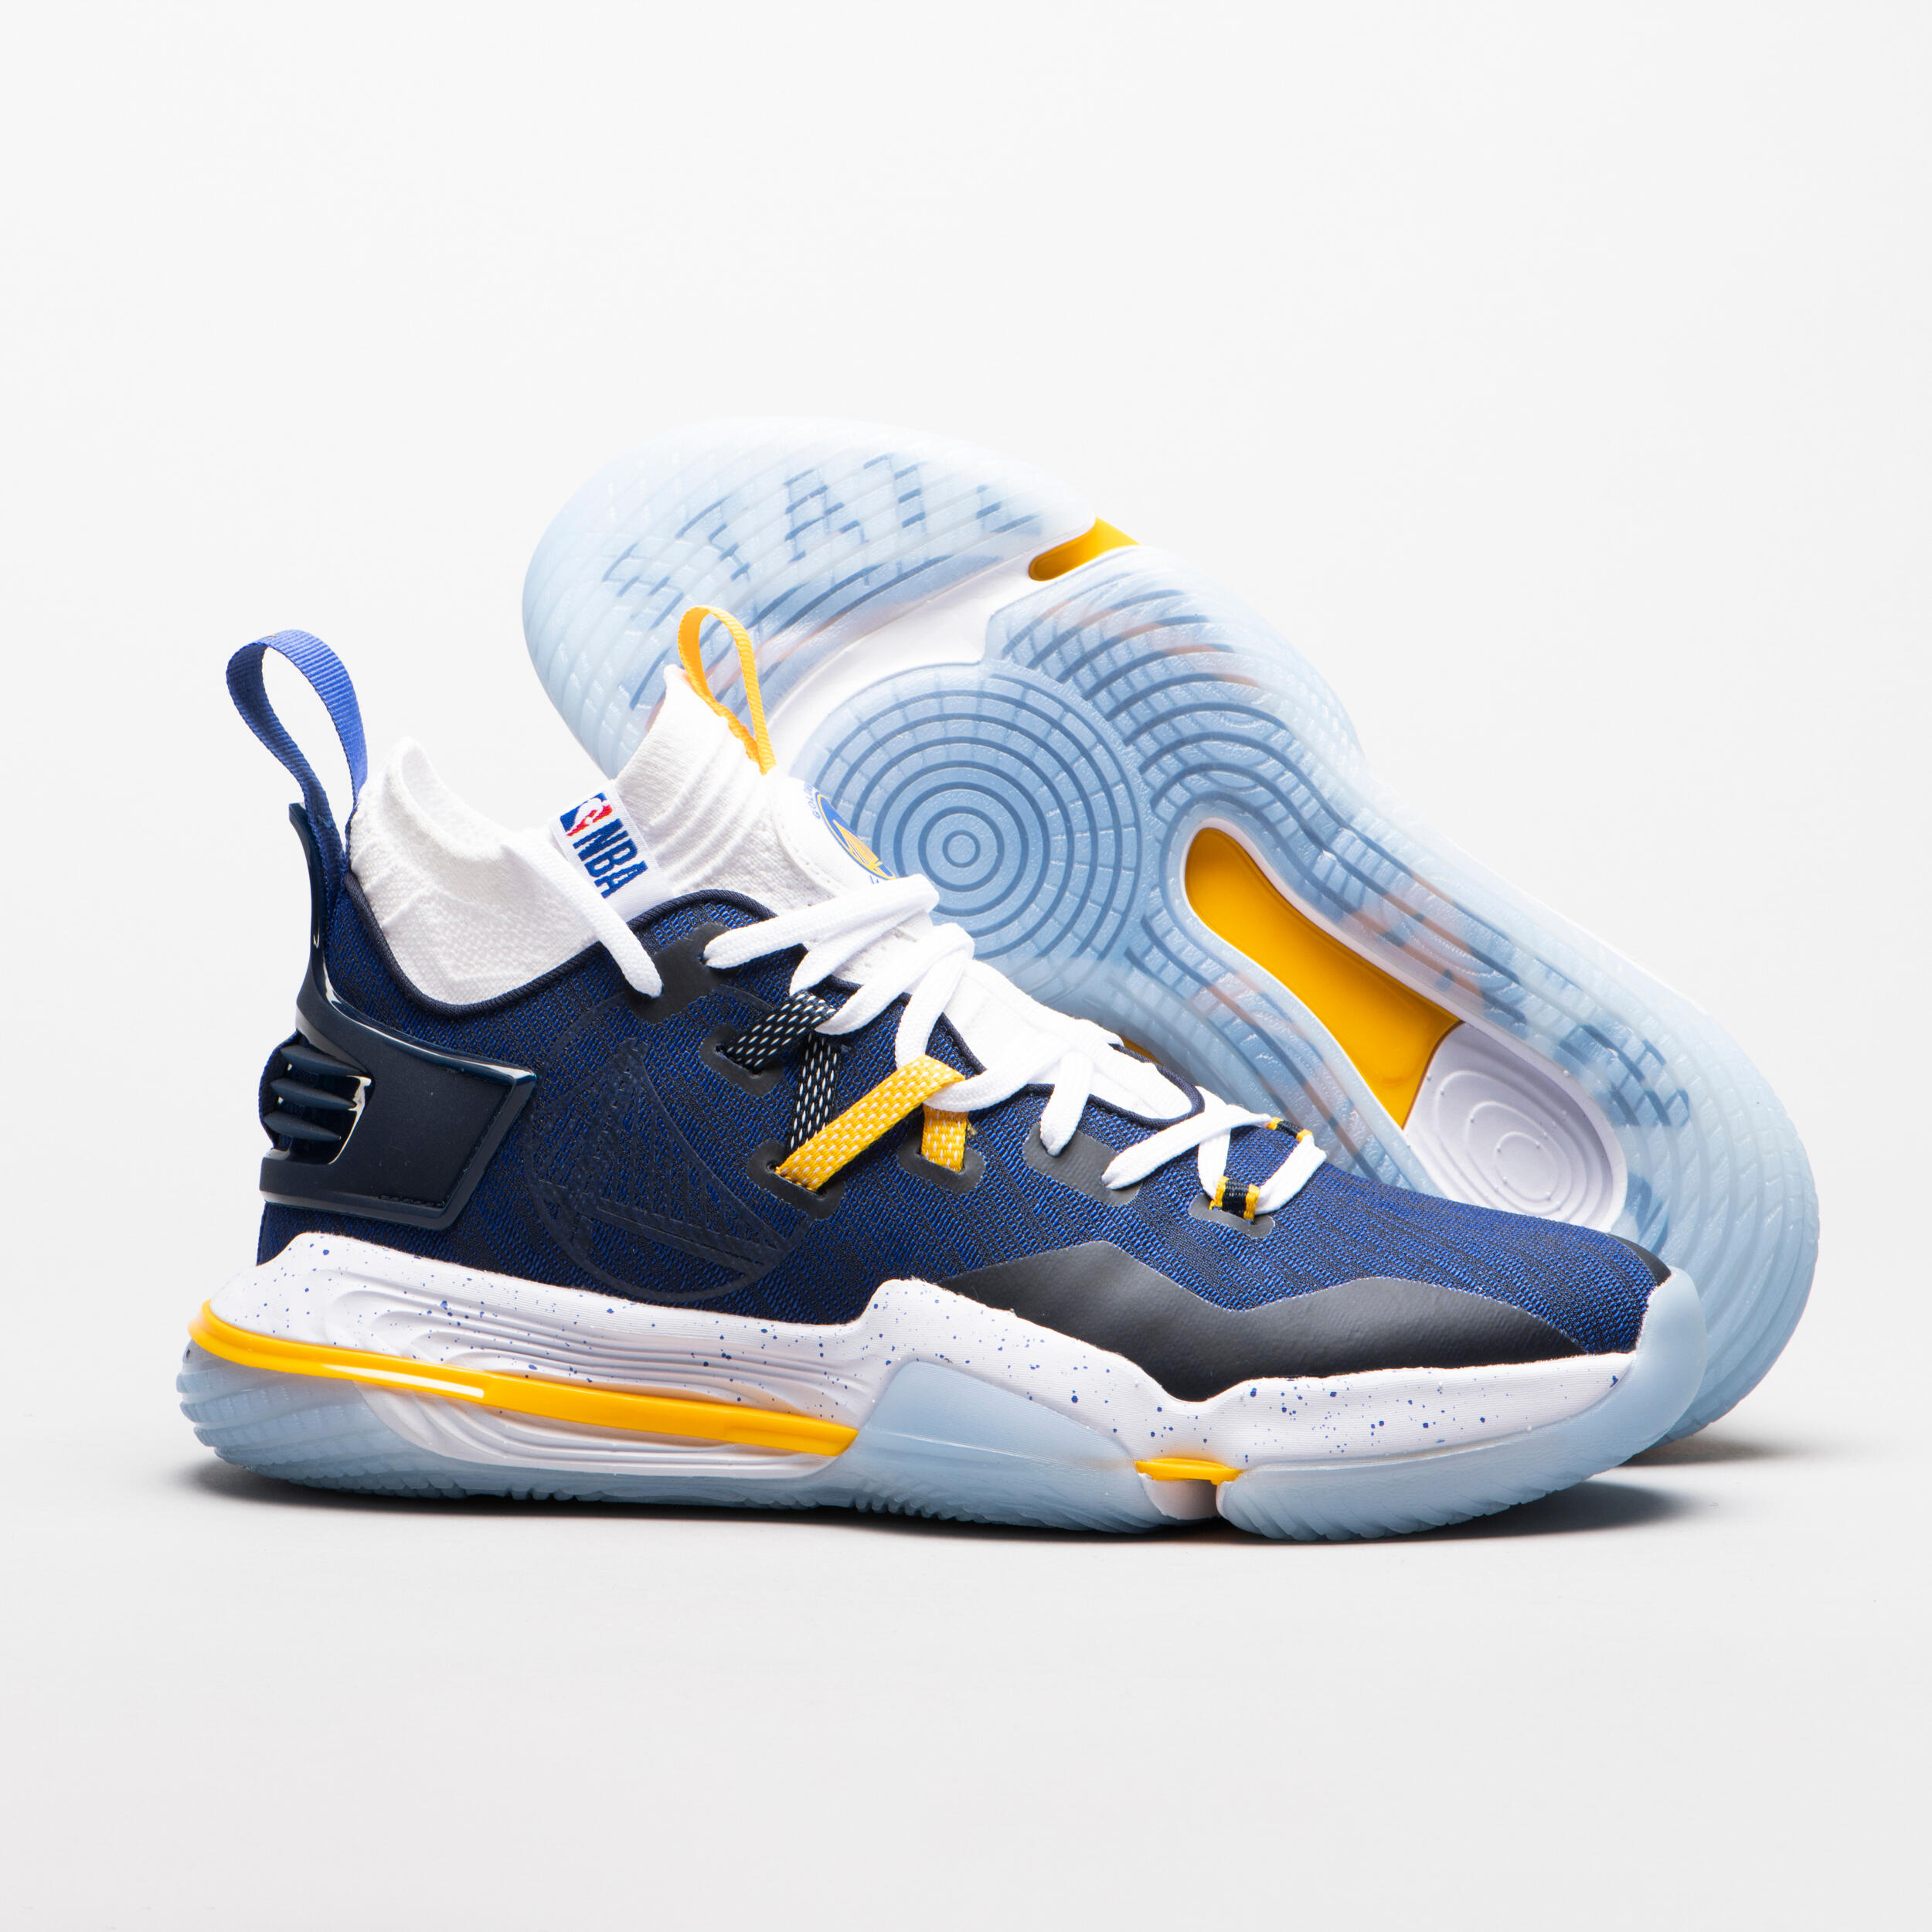 Buy Basketball Shoes Se900 Blue/Nba Golden State Warriors Online |